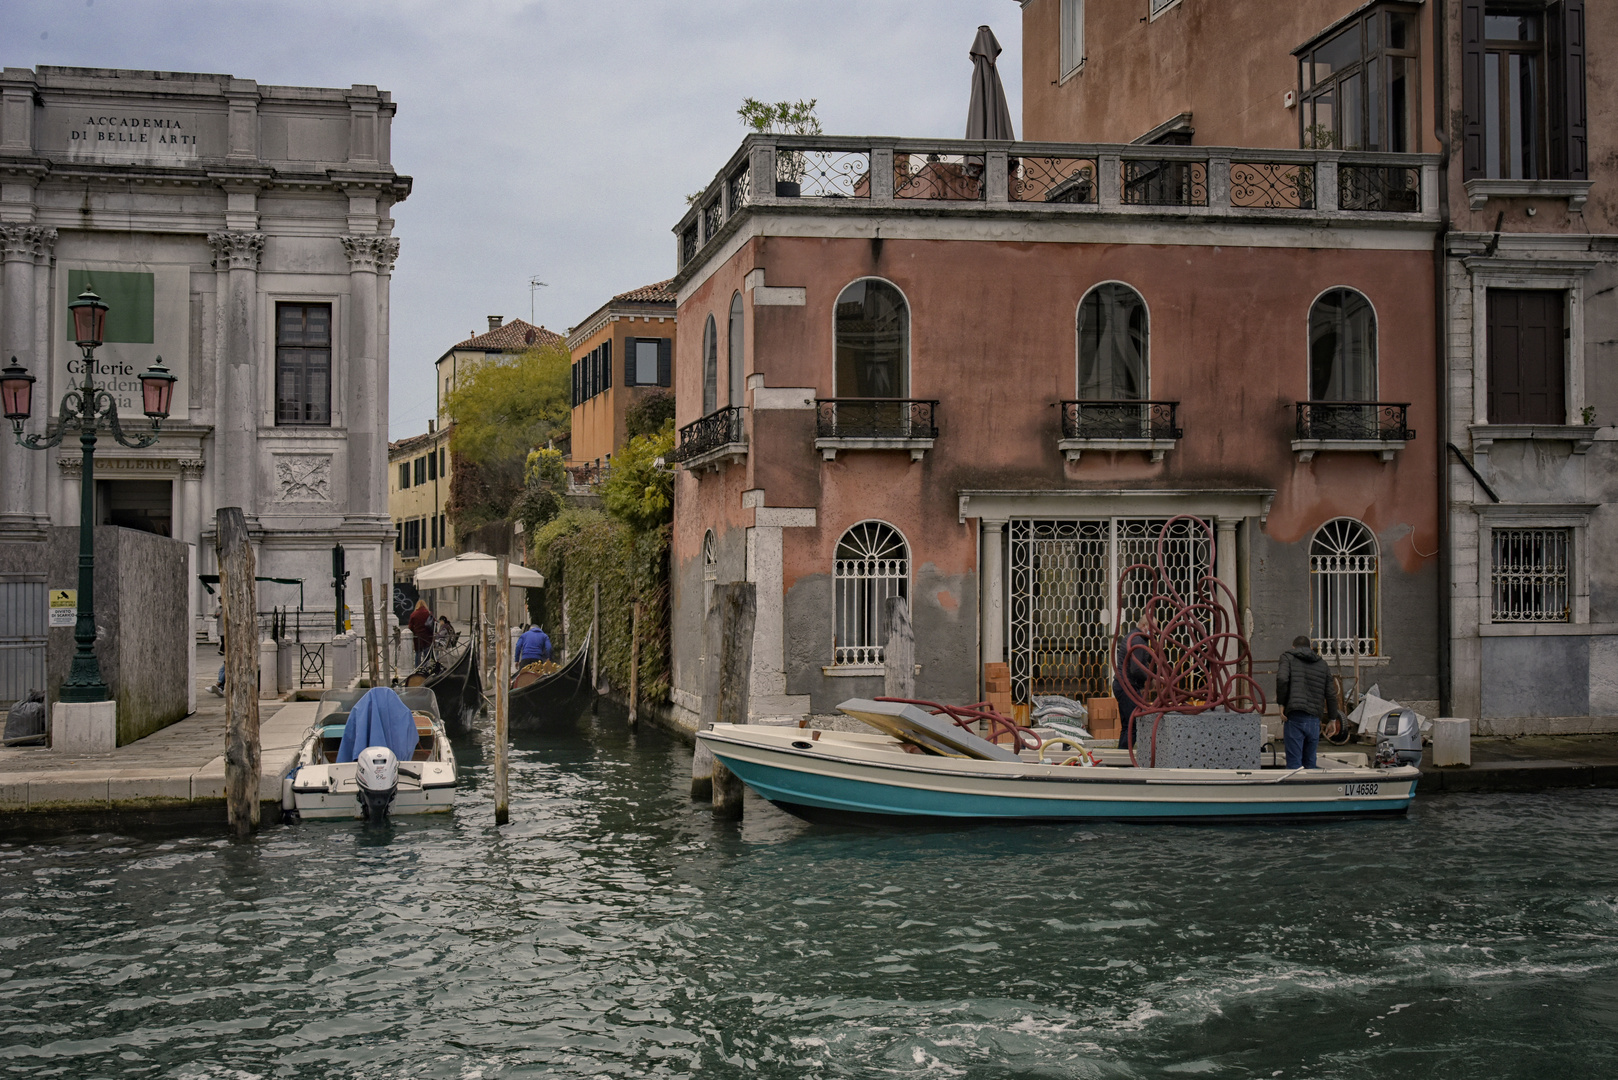 Venedig -  Leben auf dem Kanal